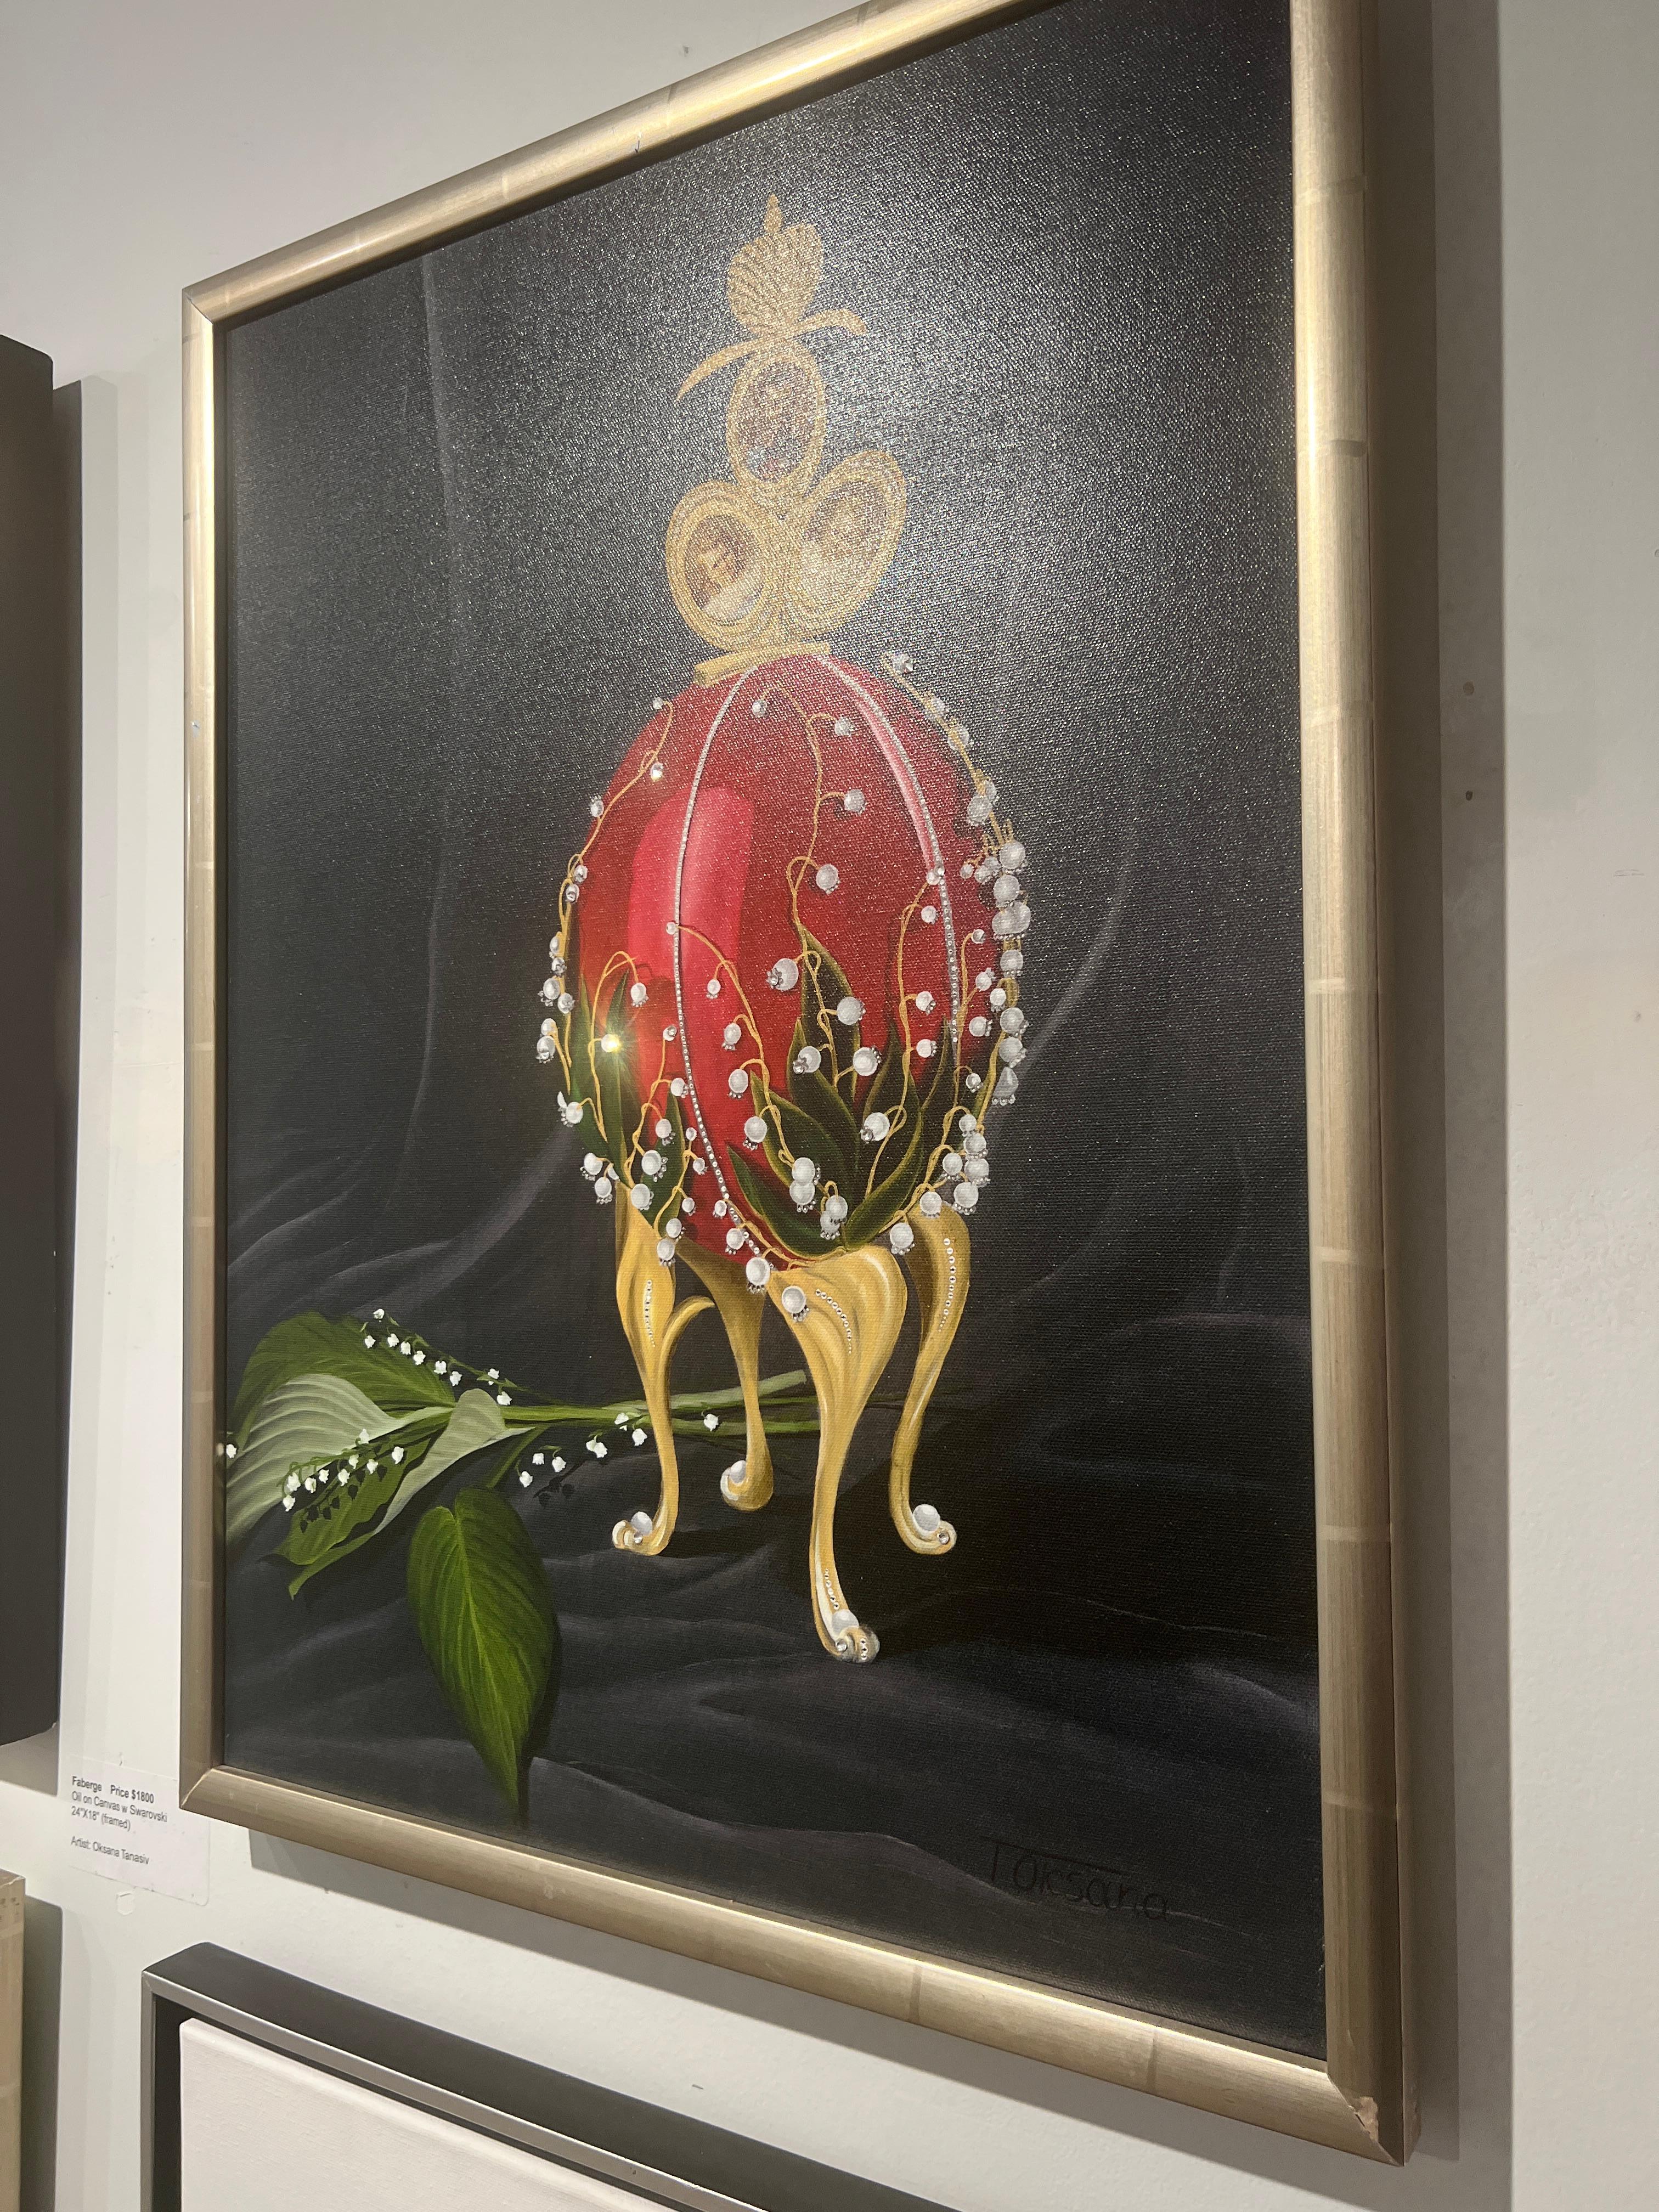 The Lilly of the Valley Egg with Unique Swarovski Crystals Mosaic Art (Œuf de Faberge avec muguet et cristaux de Swarovski) - Réalisme Mixed Media Art par Oksana Tanasiv